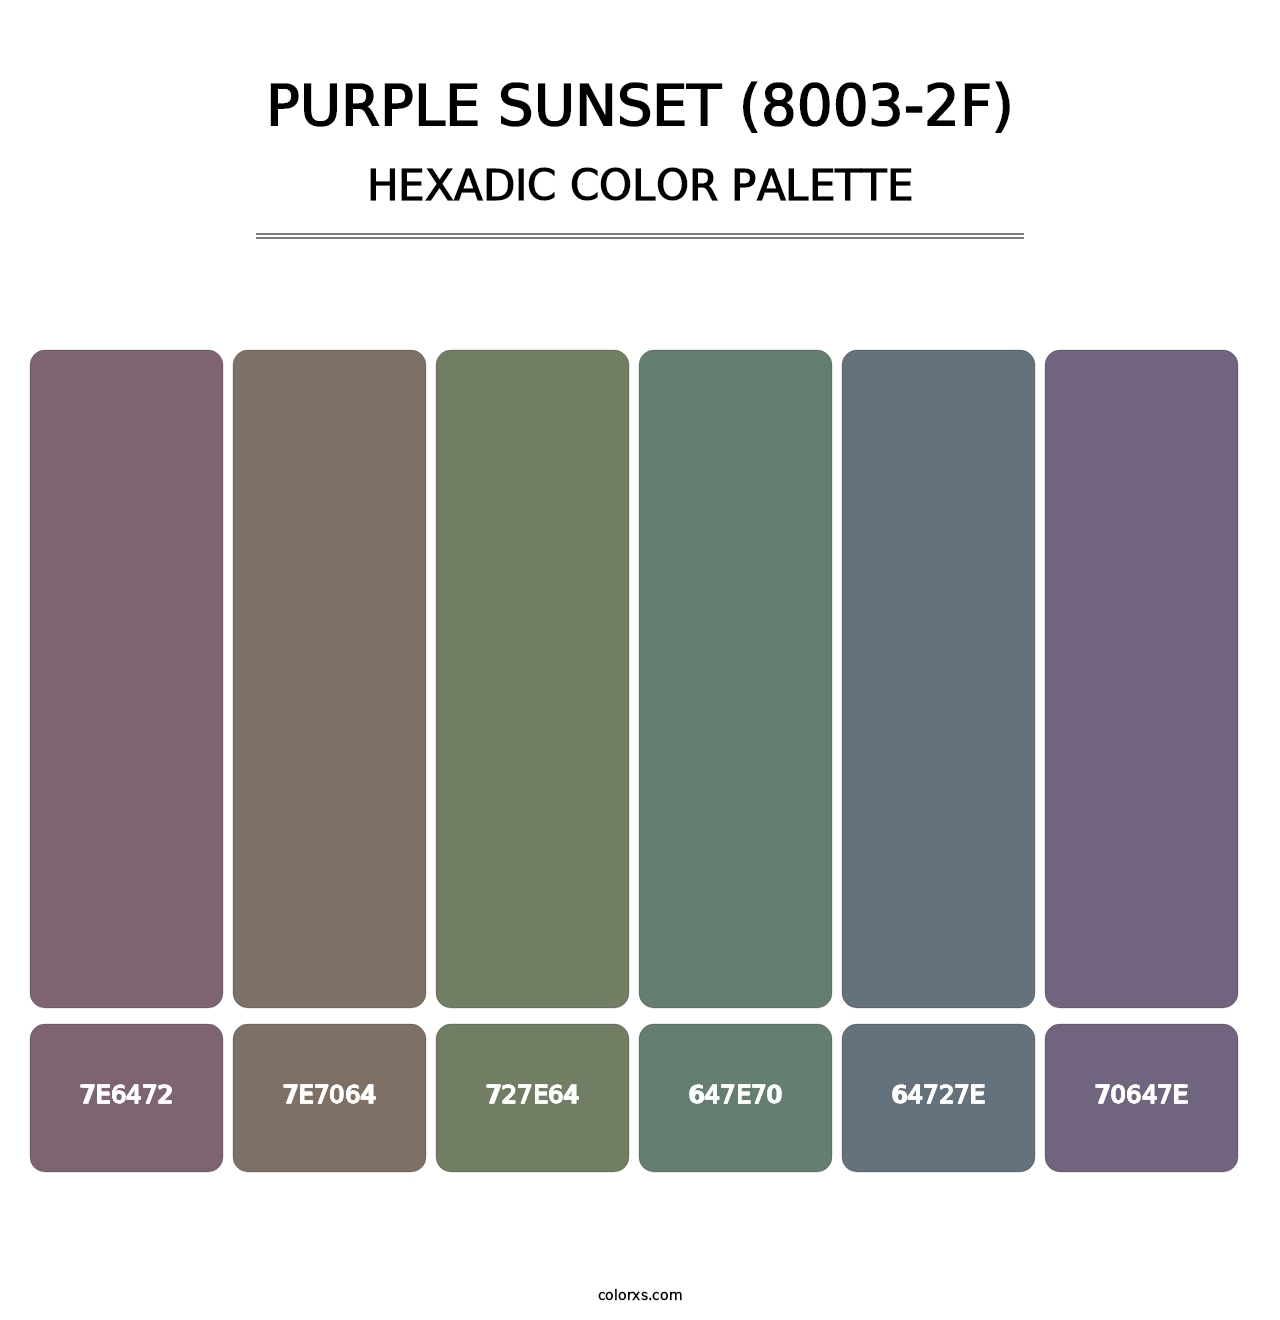 Purple Sunset (8003-2F) - Hexadic Color Palette